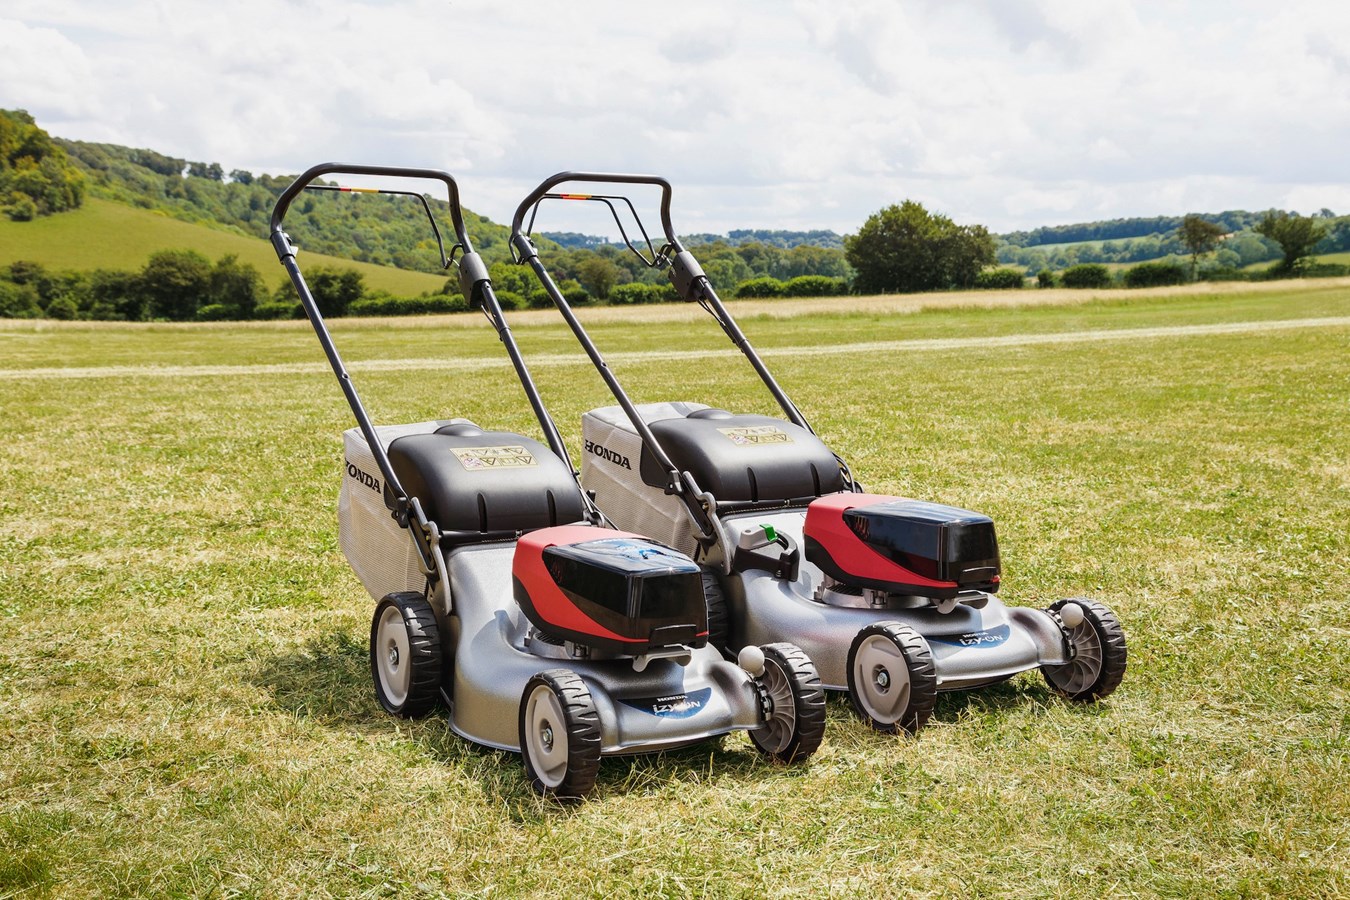 Honda to enter cordless lawn mower market and introduce smaller robotic